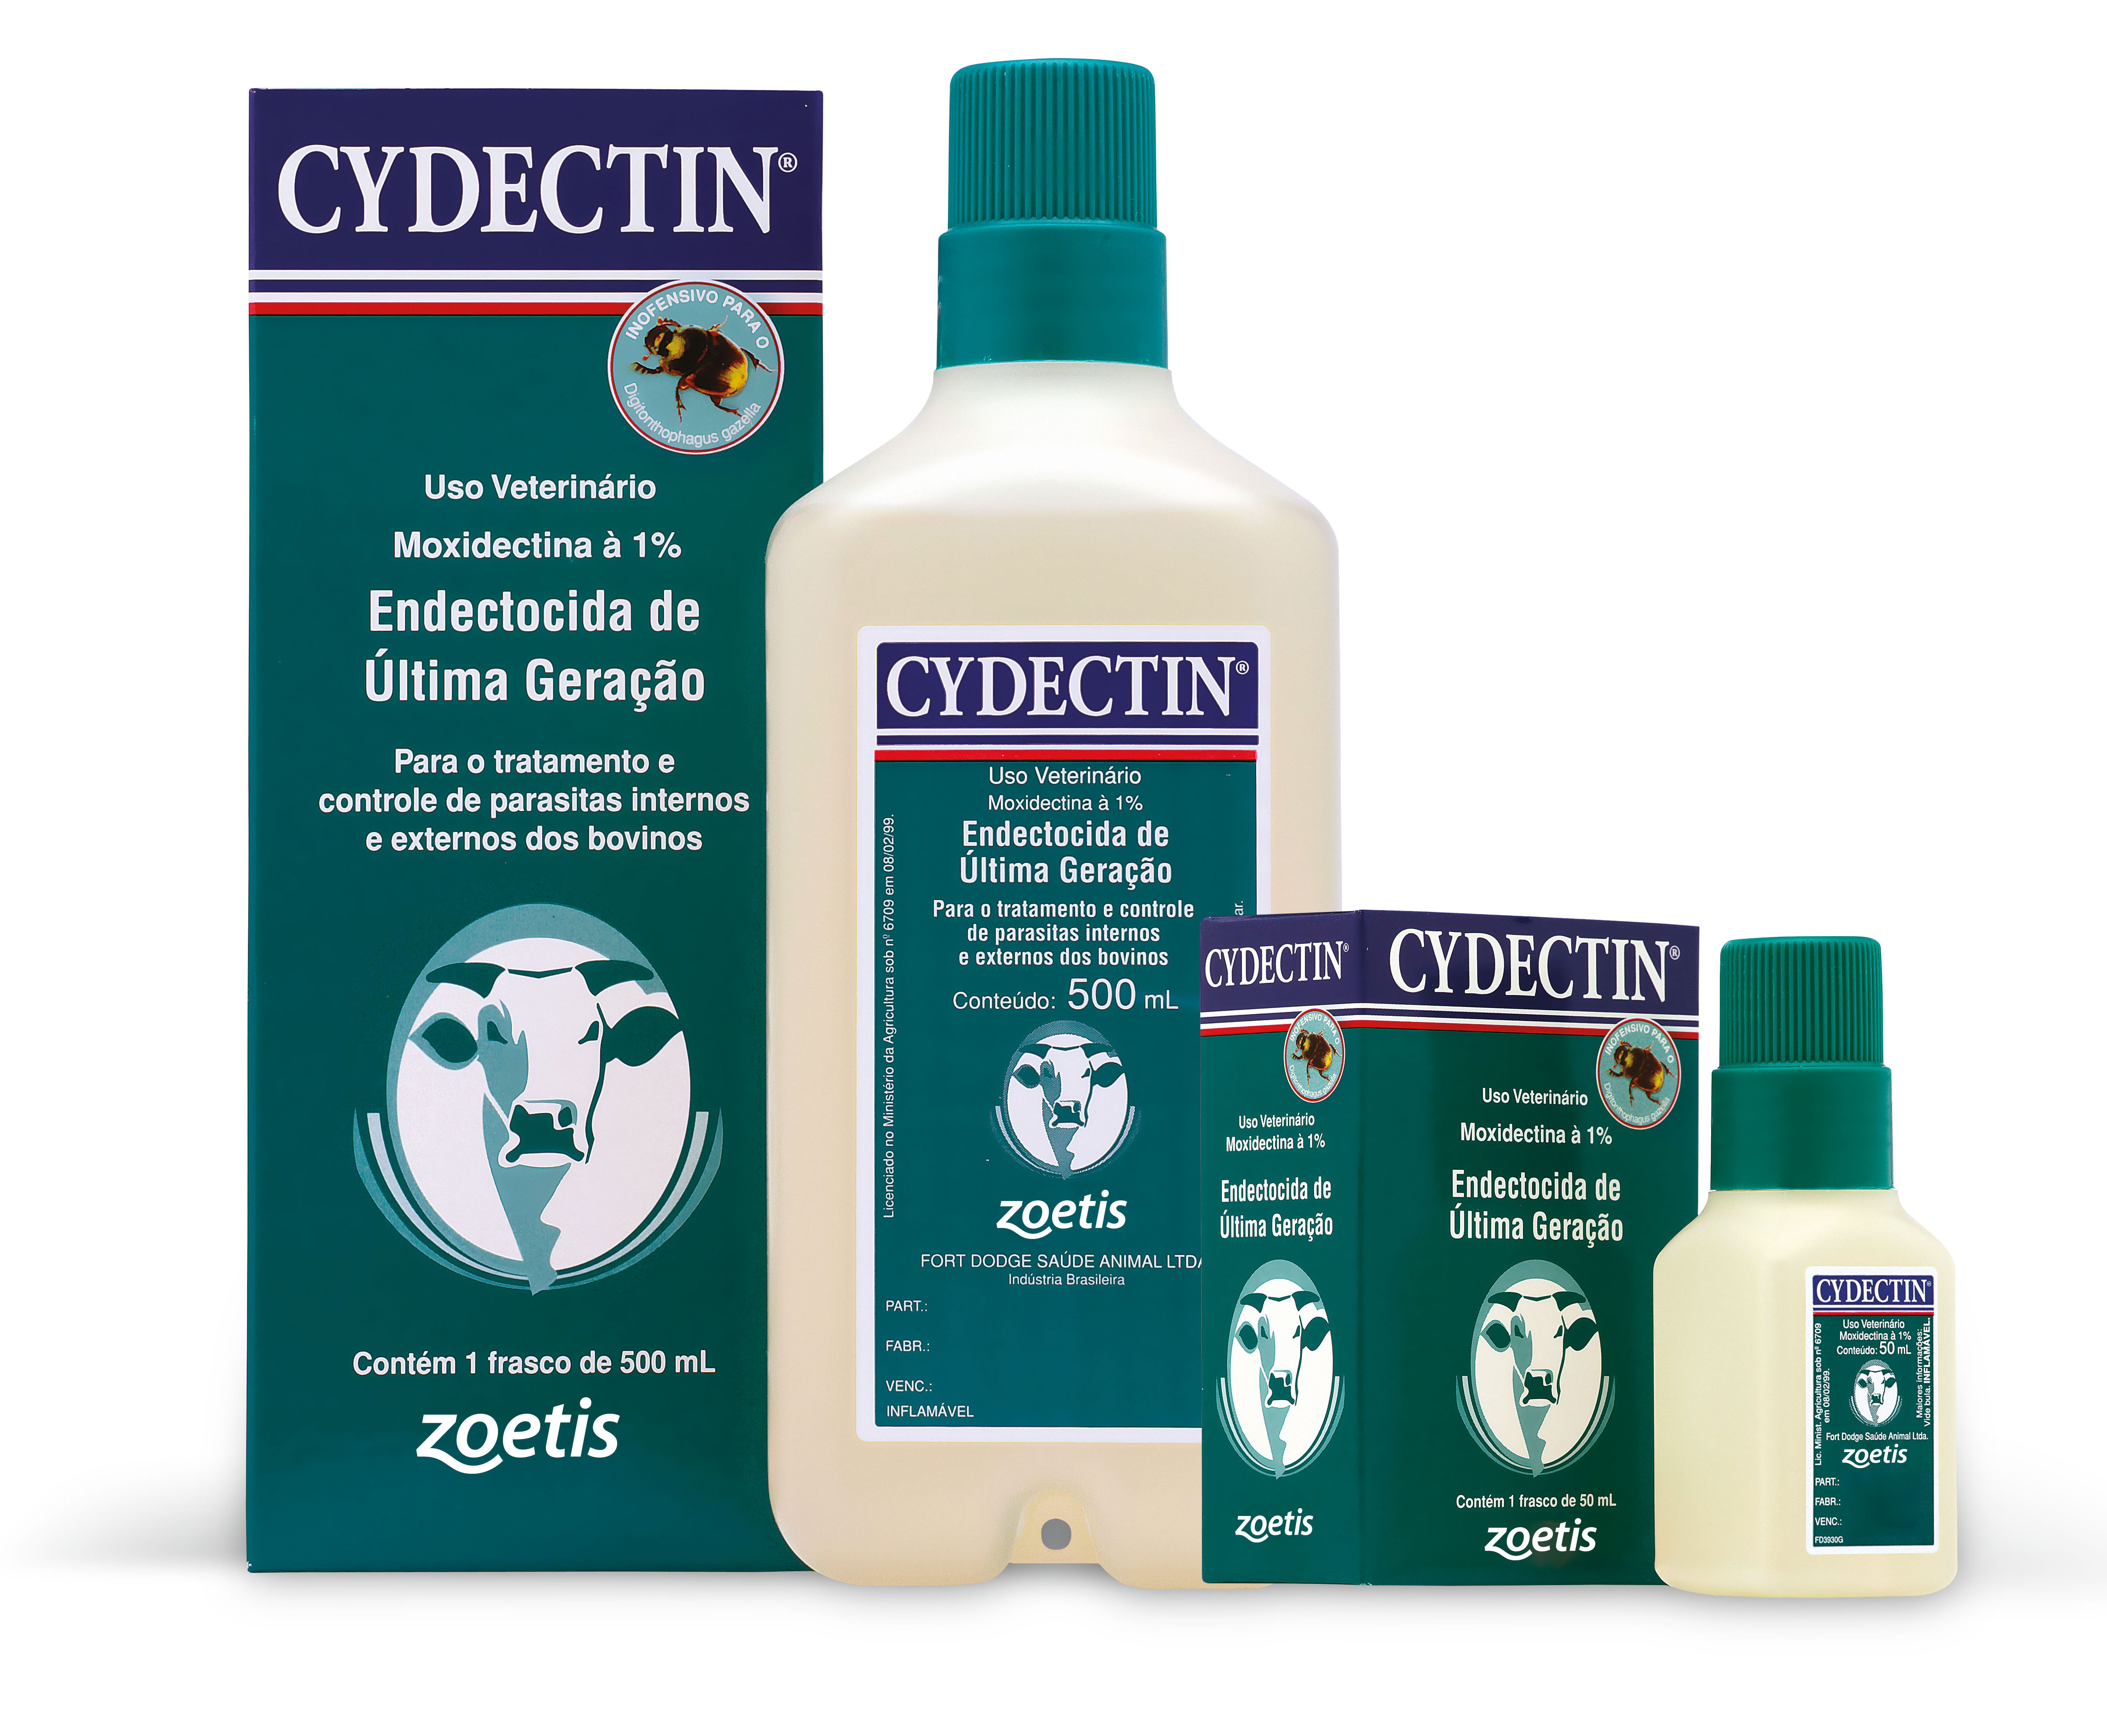 Cydectin Product